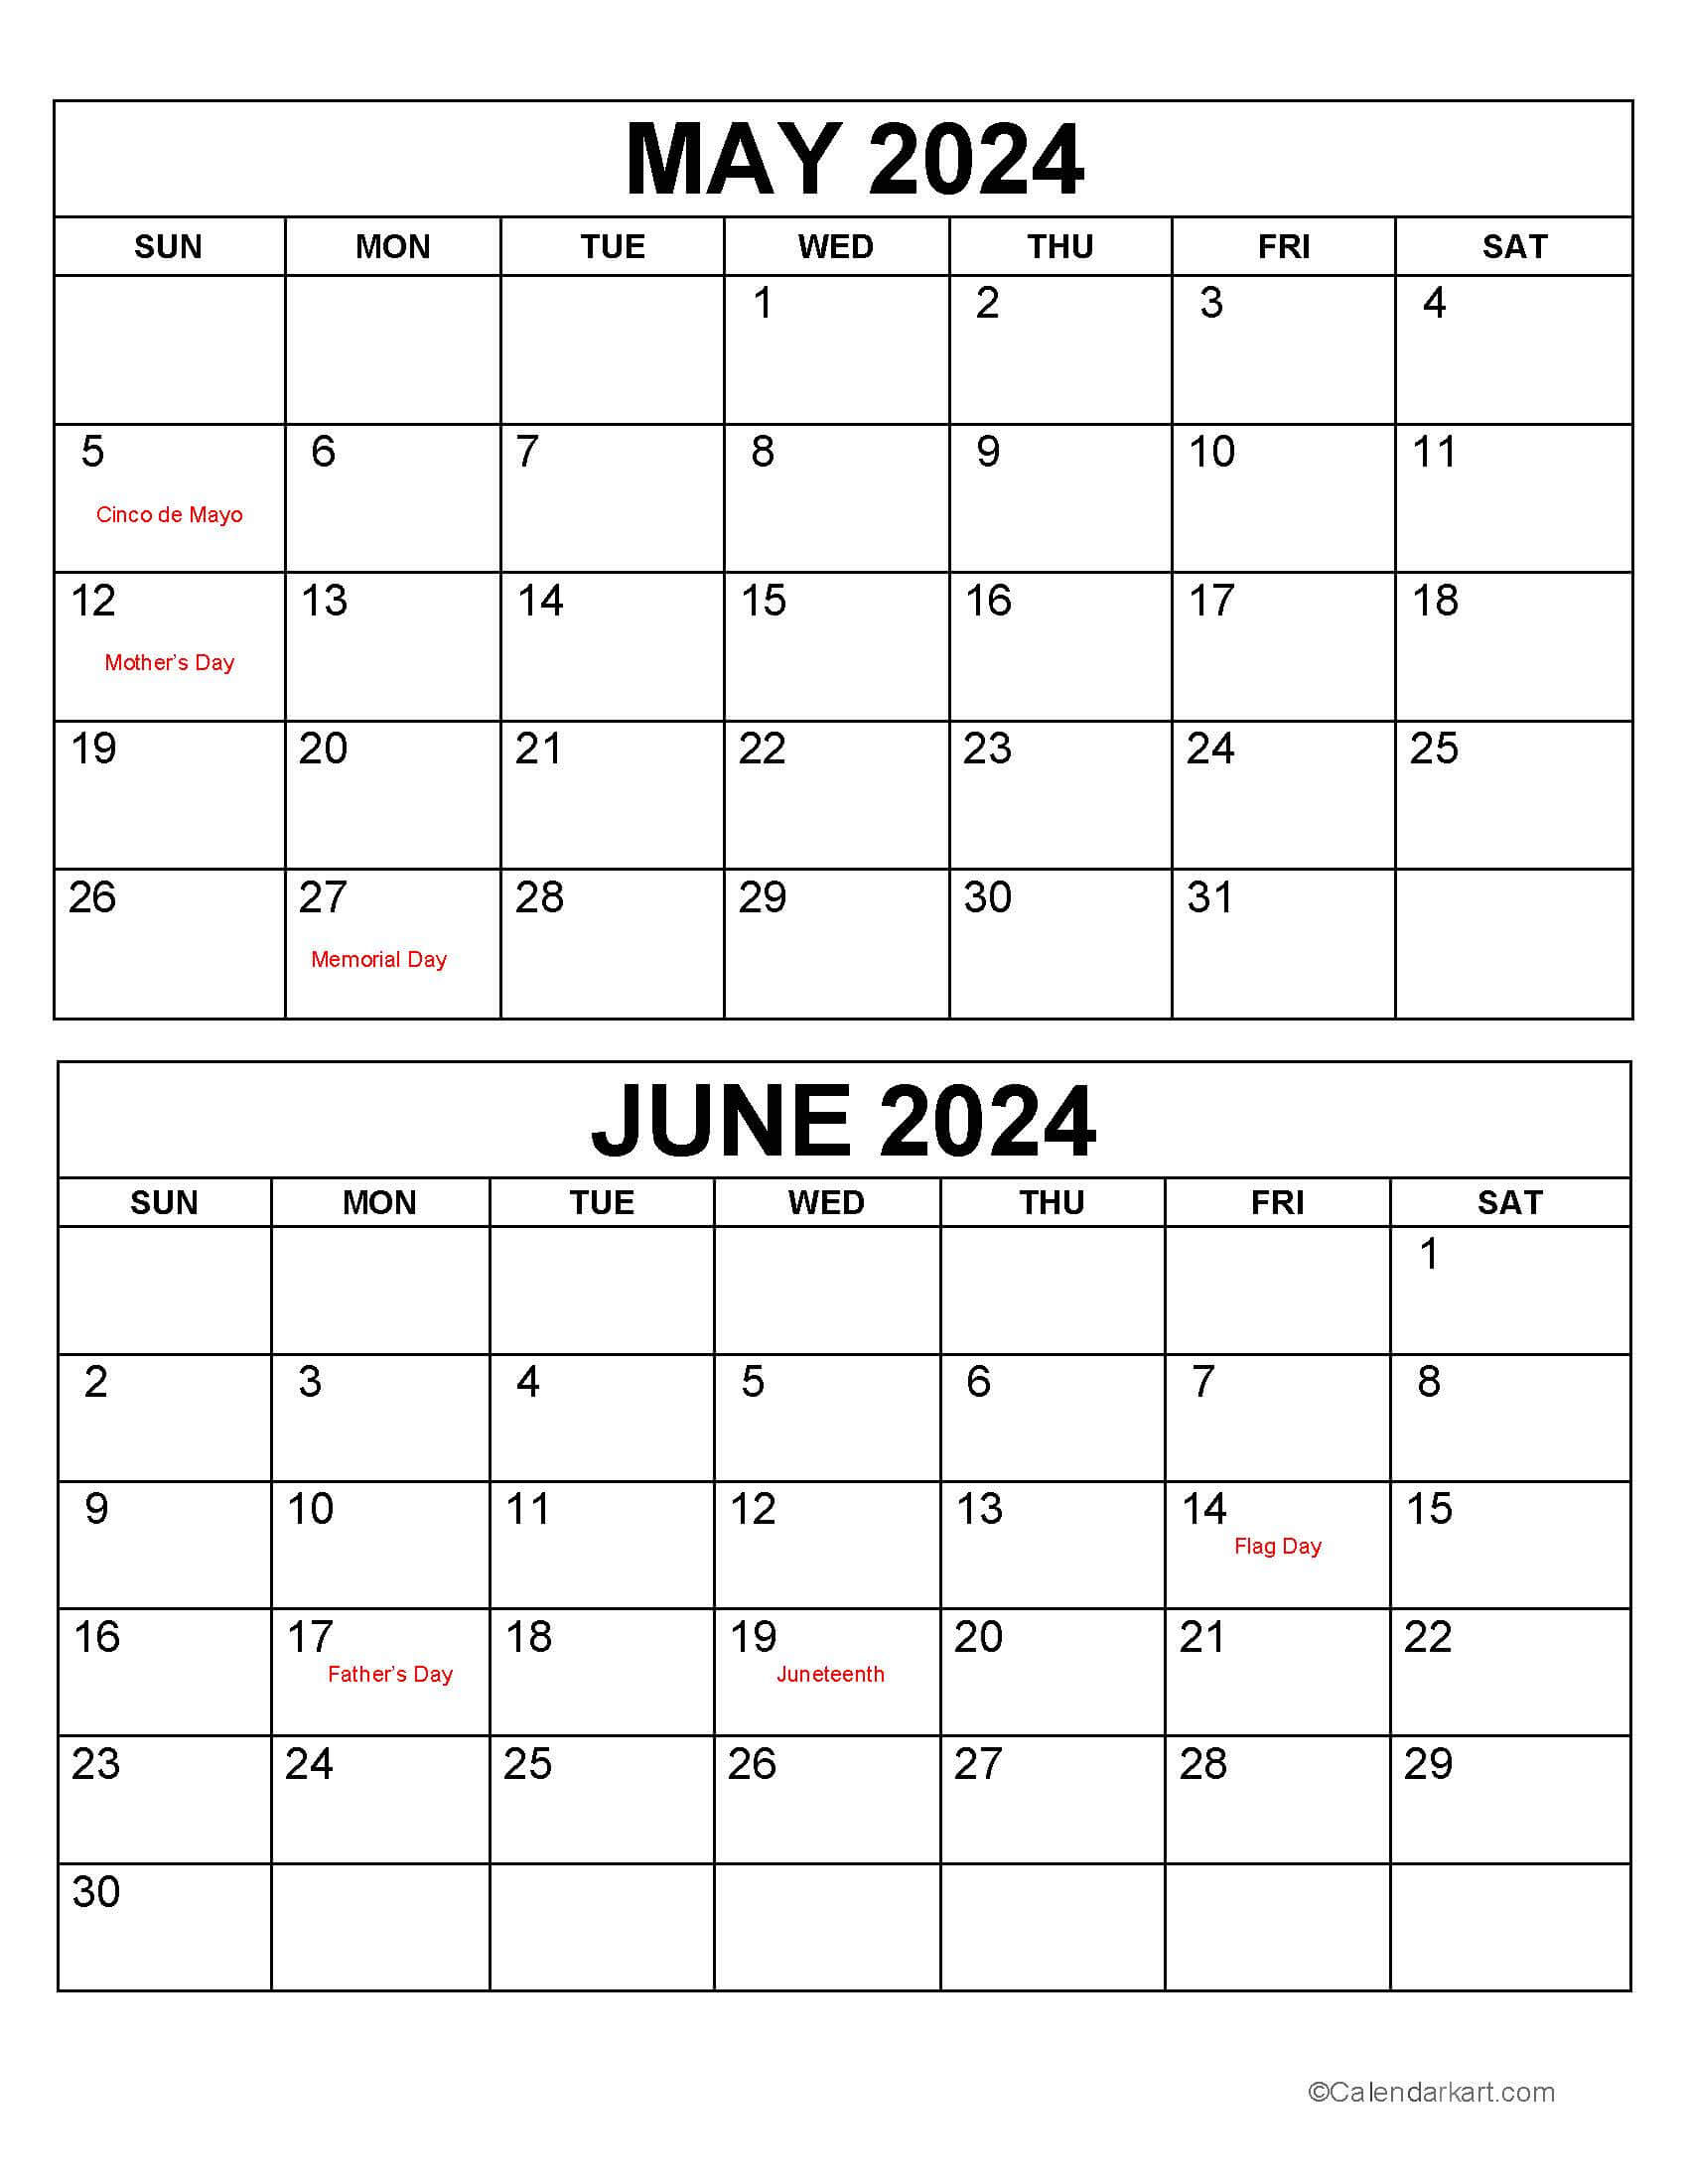 May June 2024 Calendars (3Rd Bi-Monthly) - Calendarkart pertaining to May And June 2024 Calendar